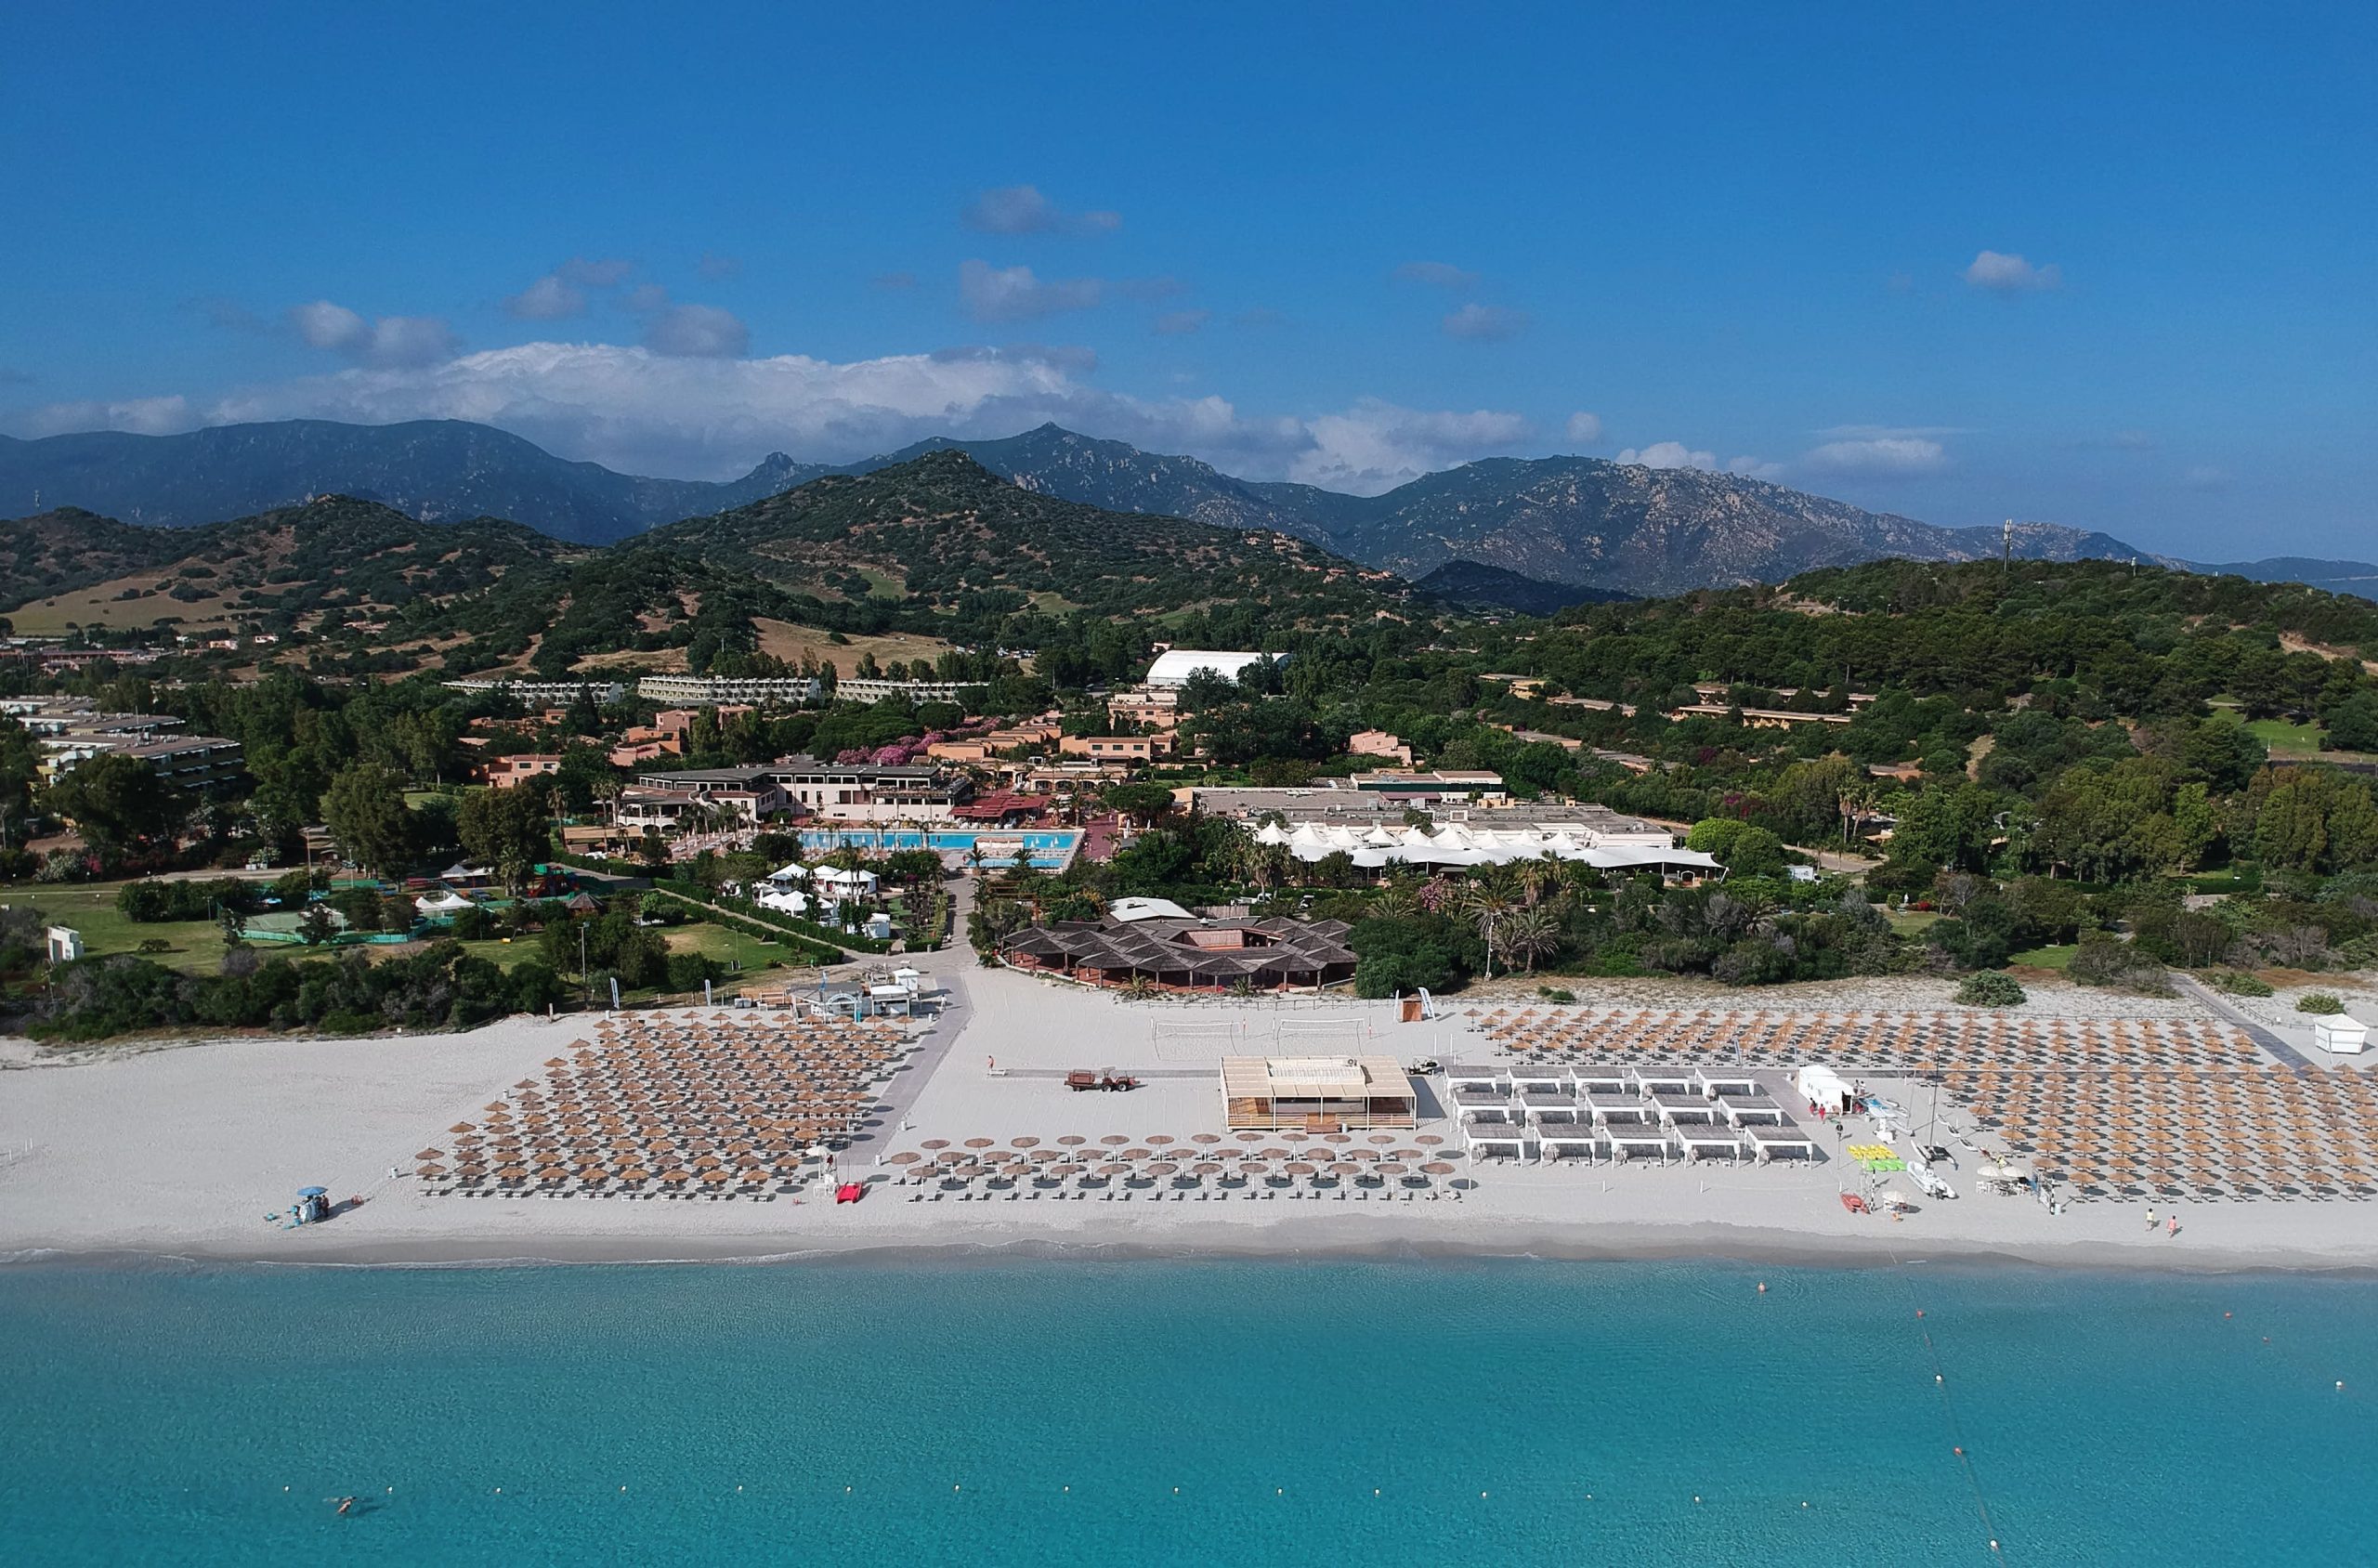 Event Beach Resort Sardinia - aerial